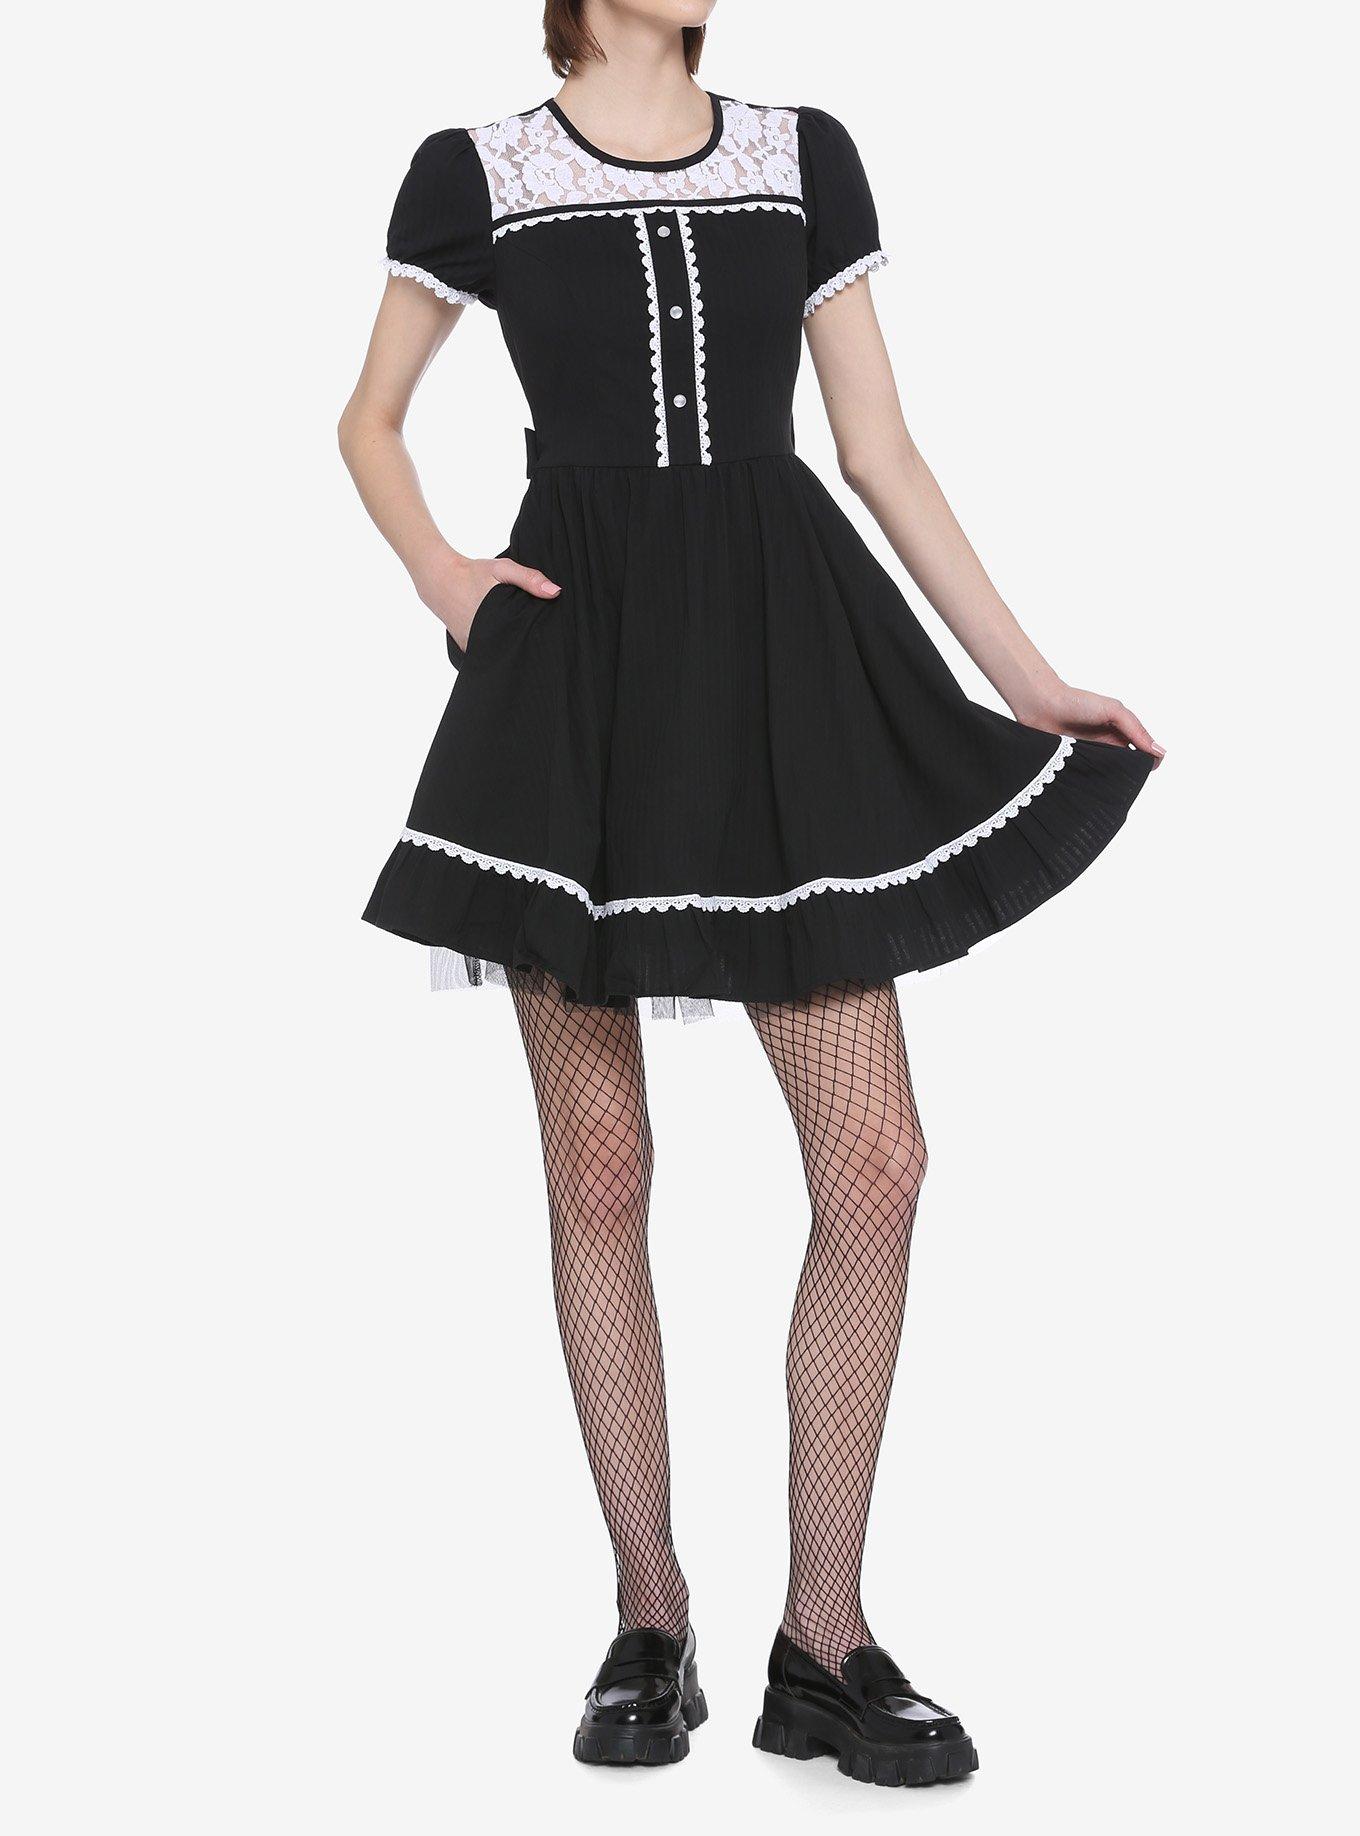 Black & White Lace Panel Dress, BLACK, alternate